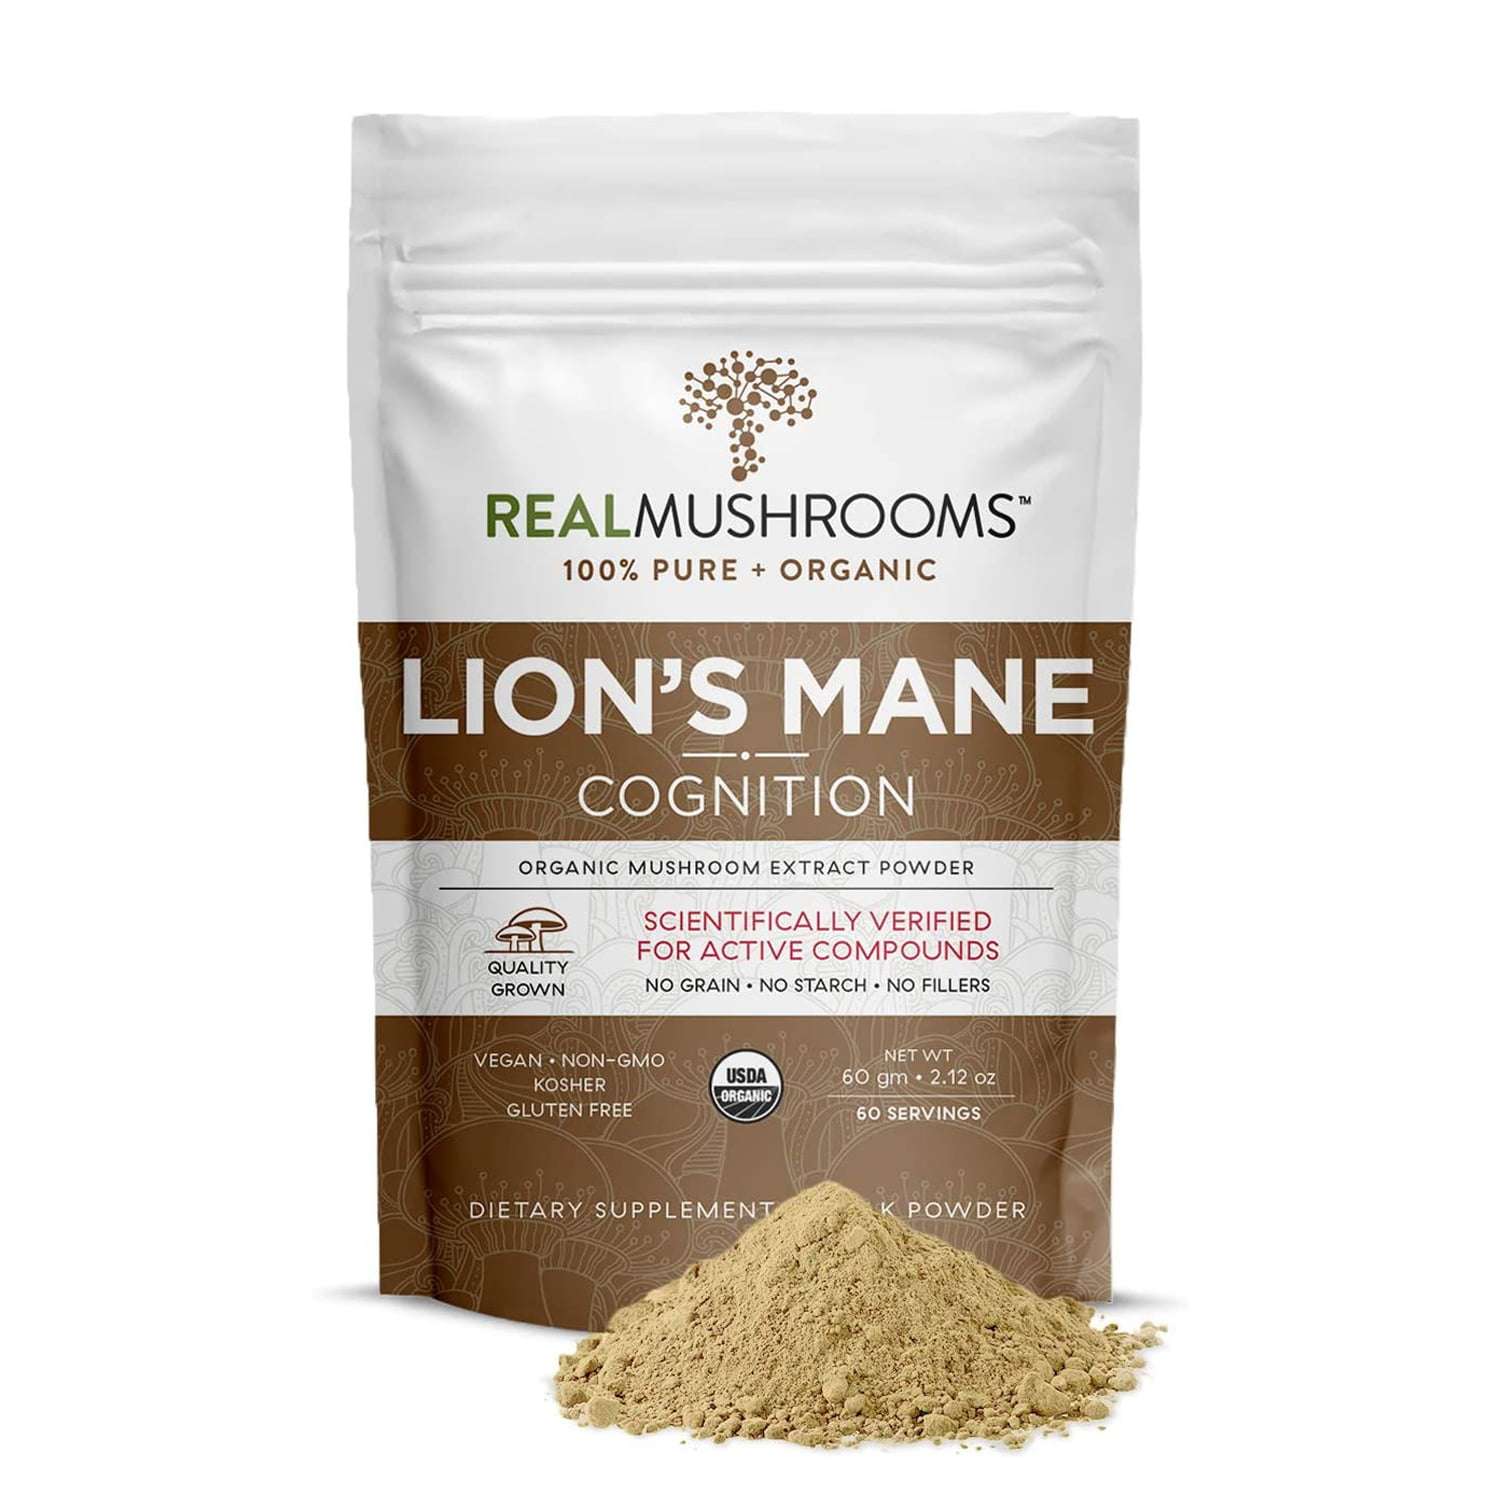 Lions Mane Mushroom Extract Powder by Real Mushrooms